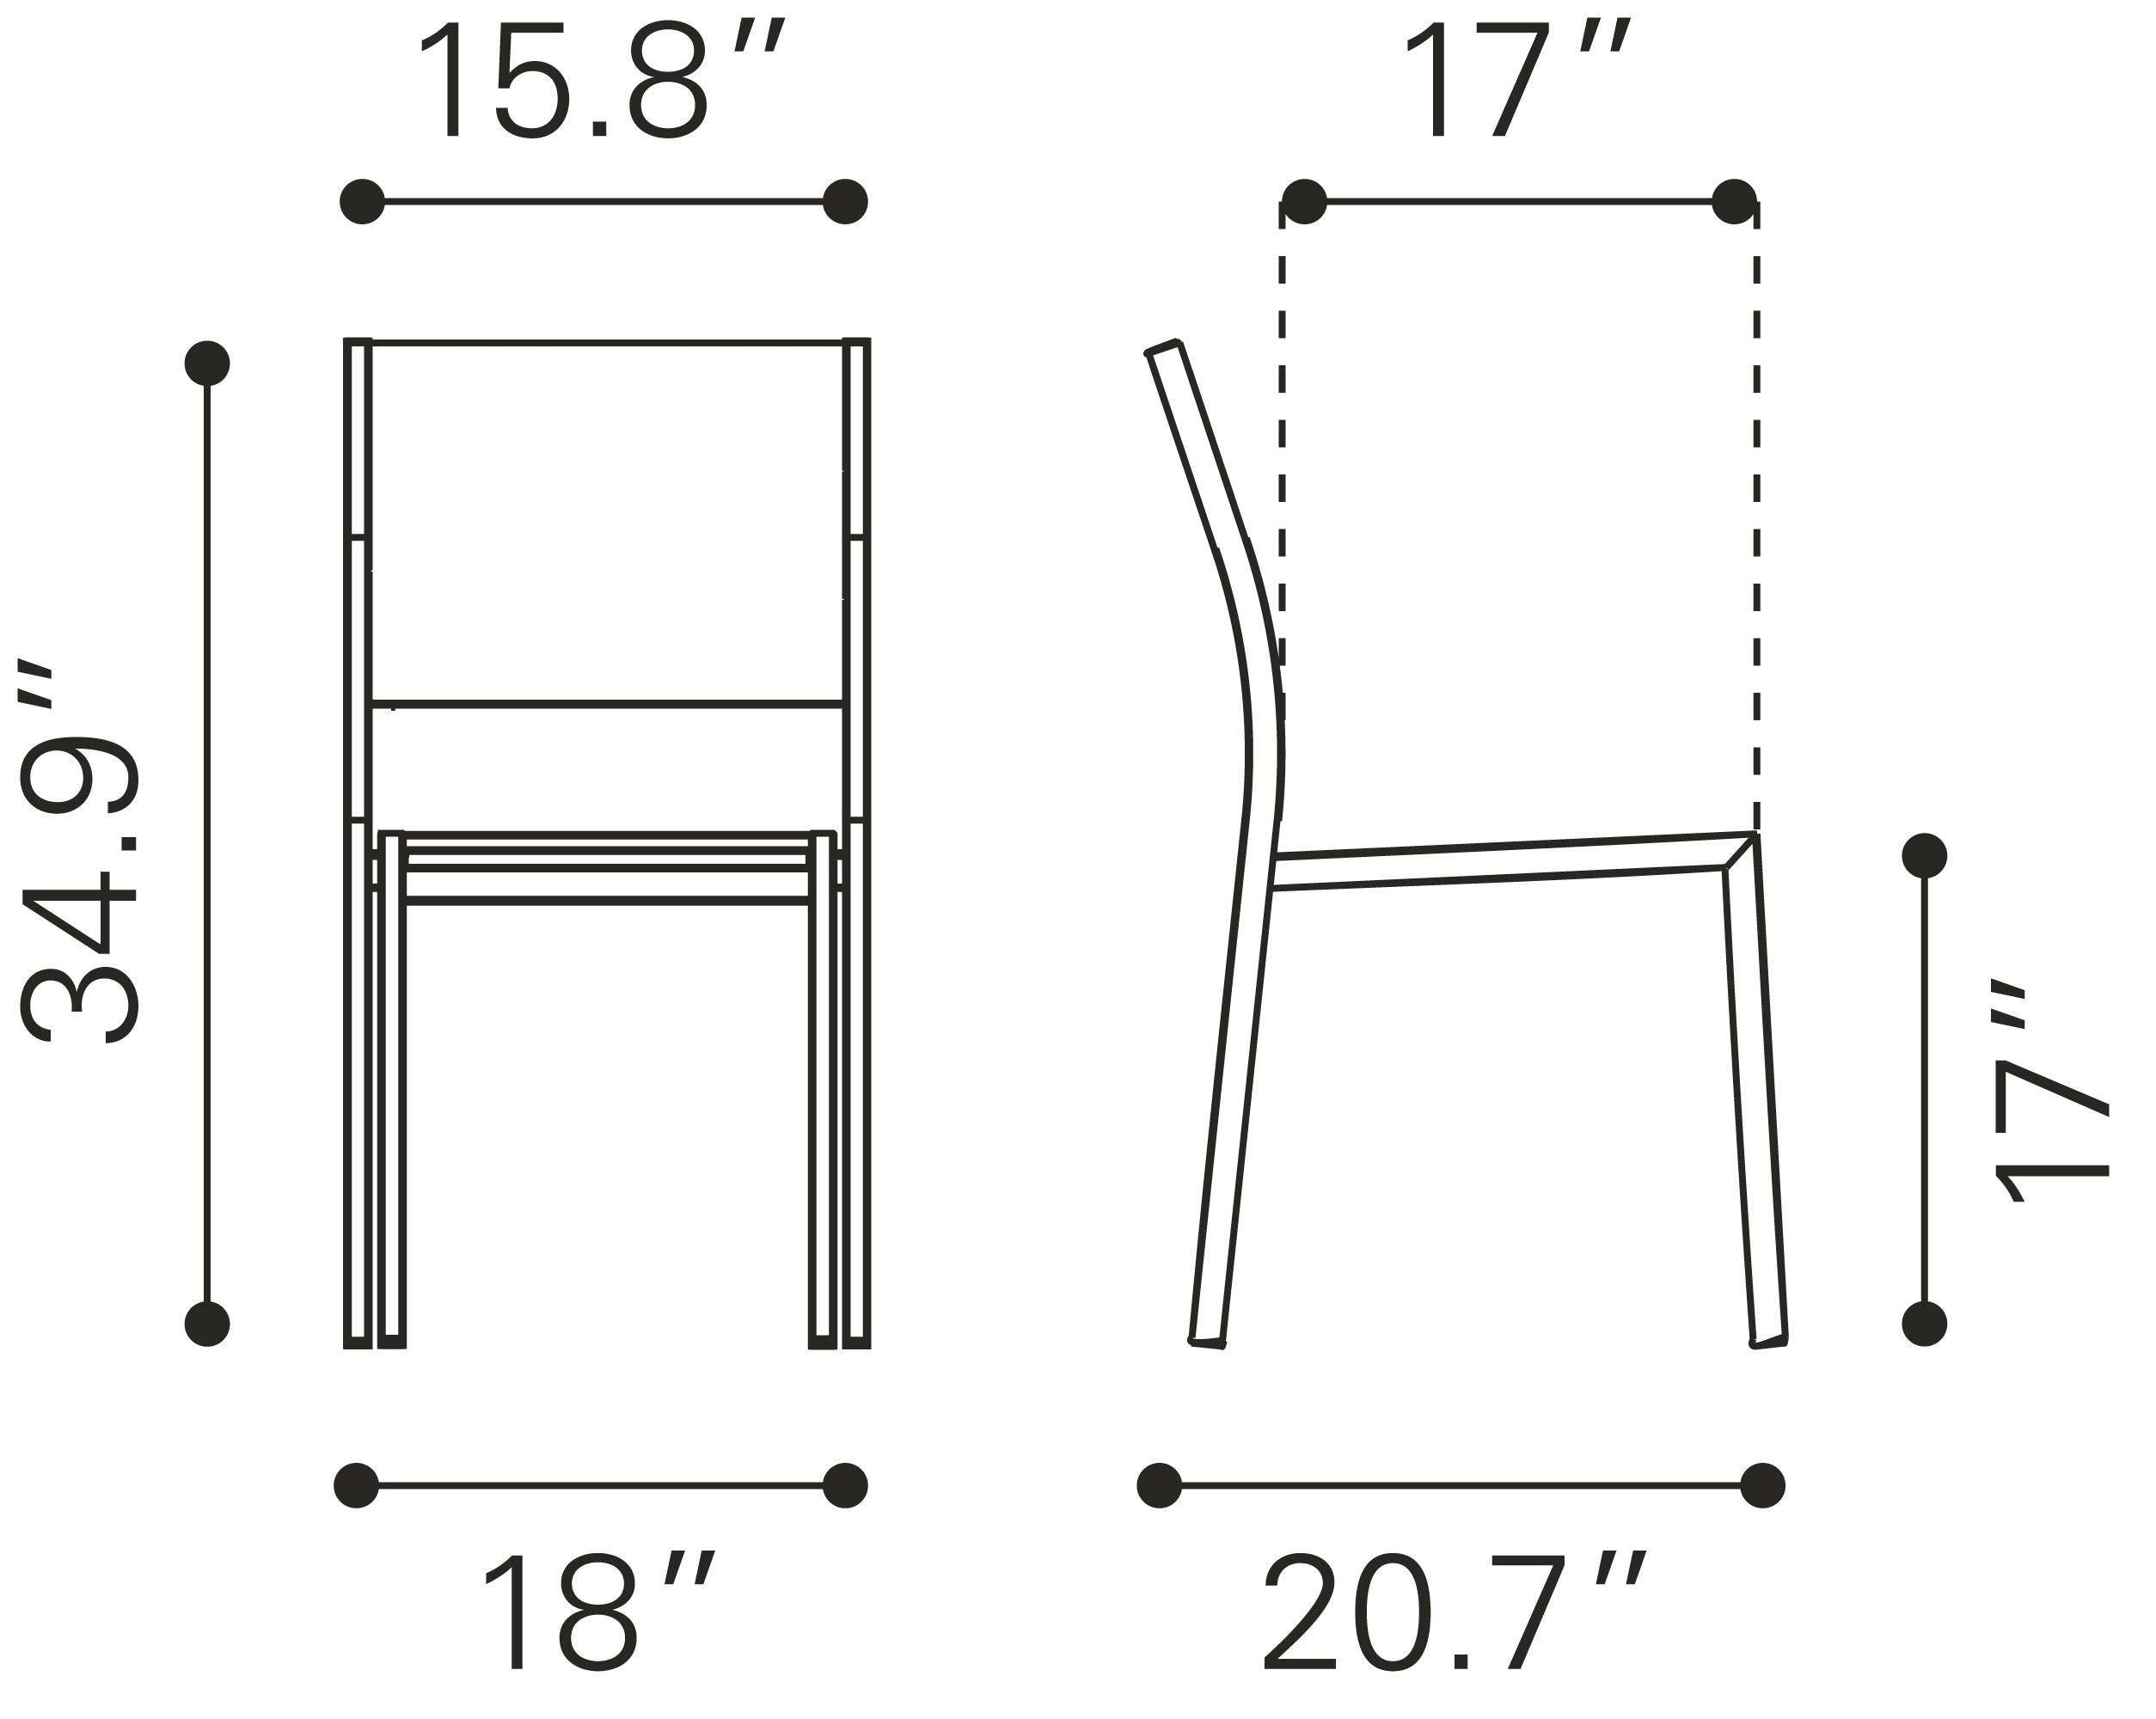 Metropolitan Armless Chair (Set of 2) Gray & Silver